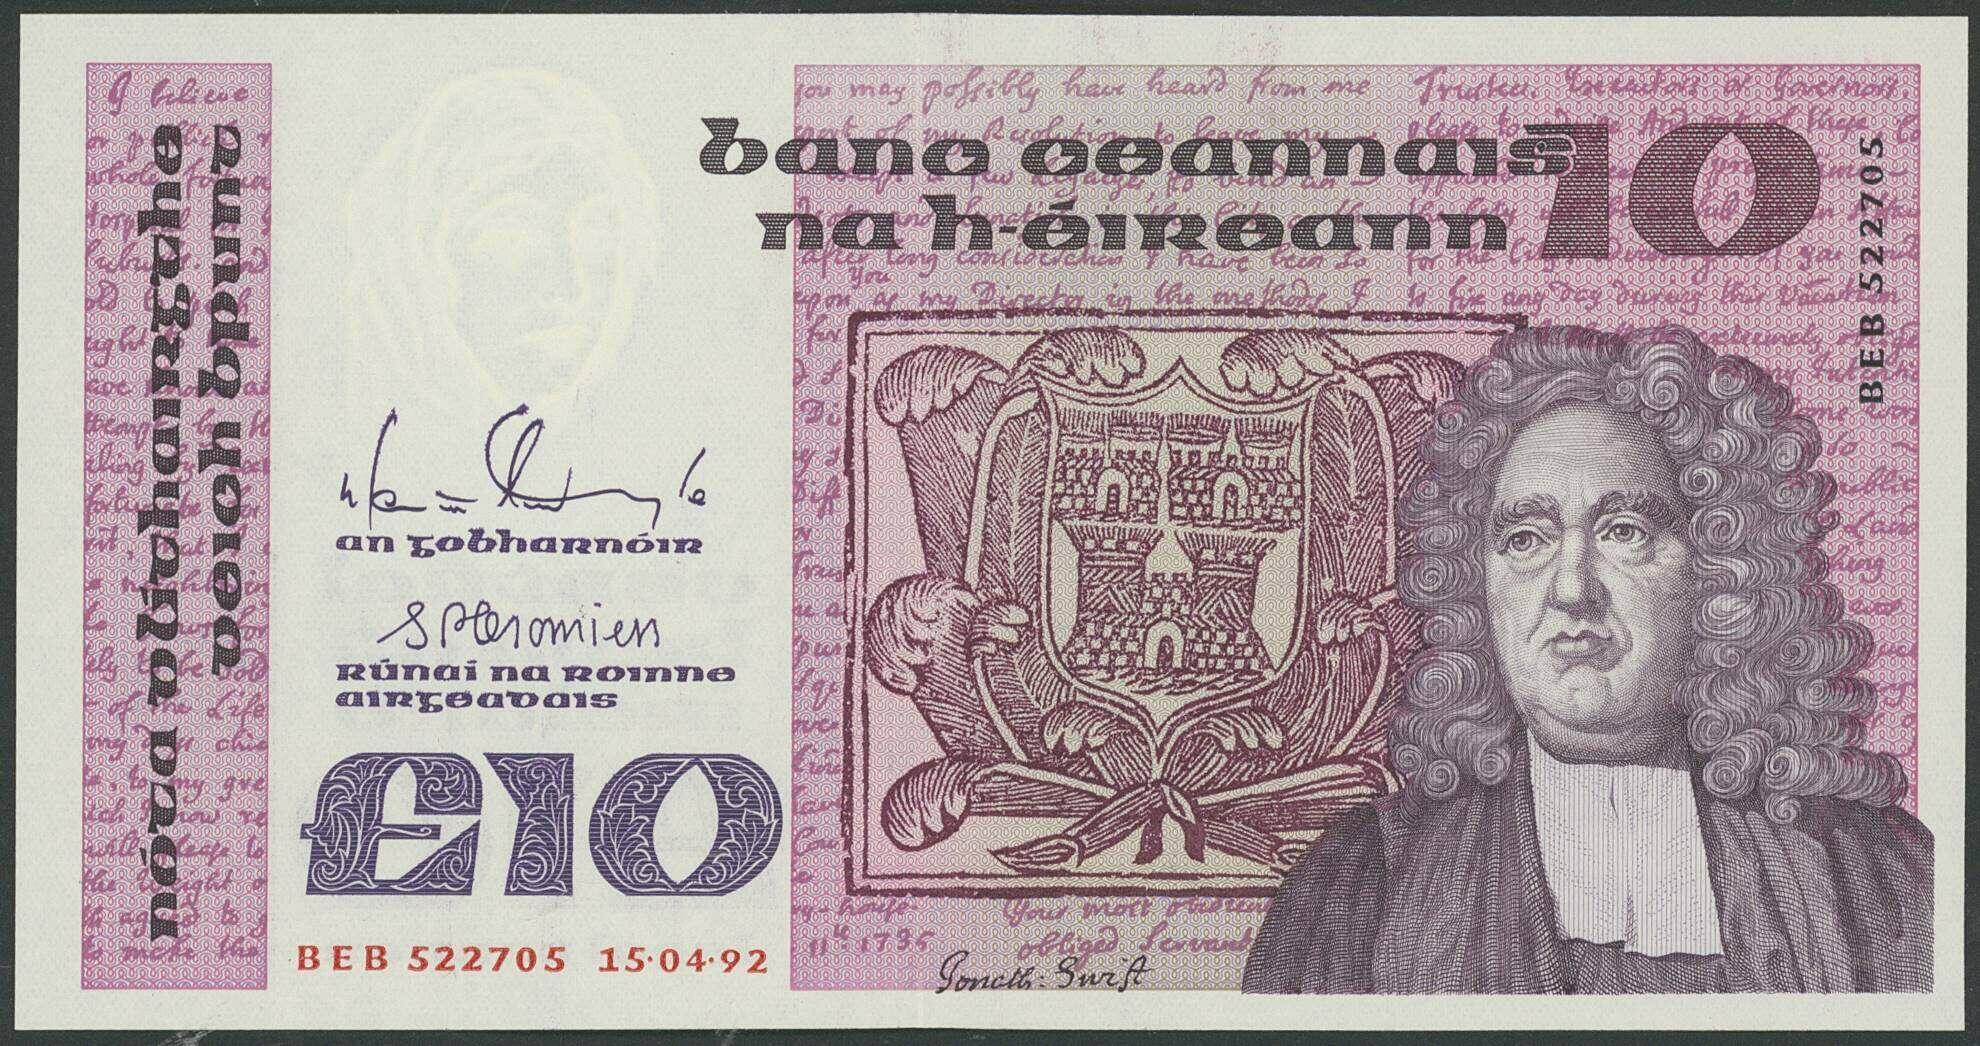 110.180: Banknotes - Ireland